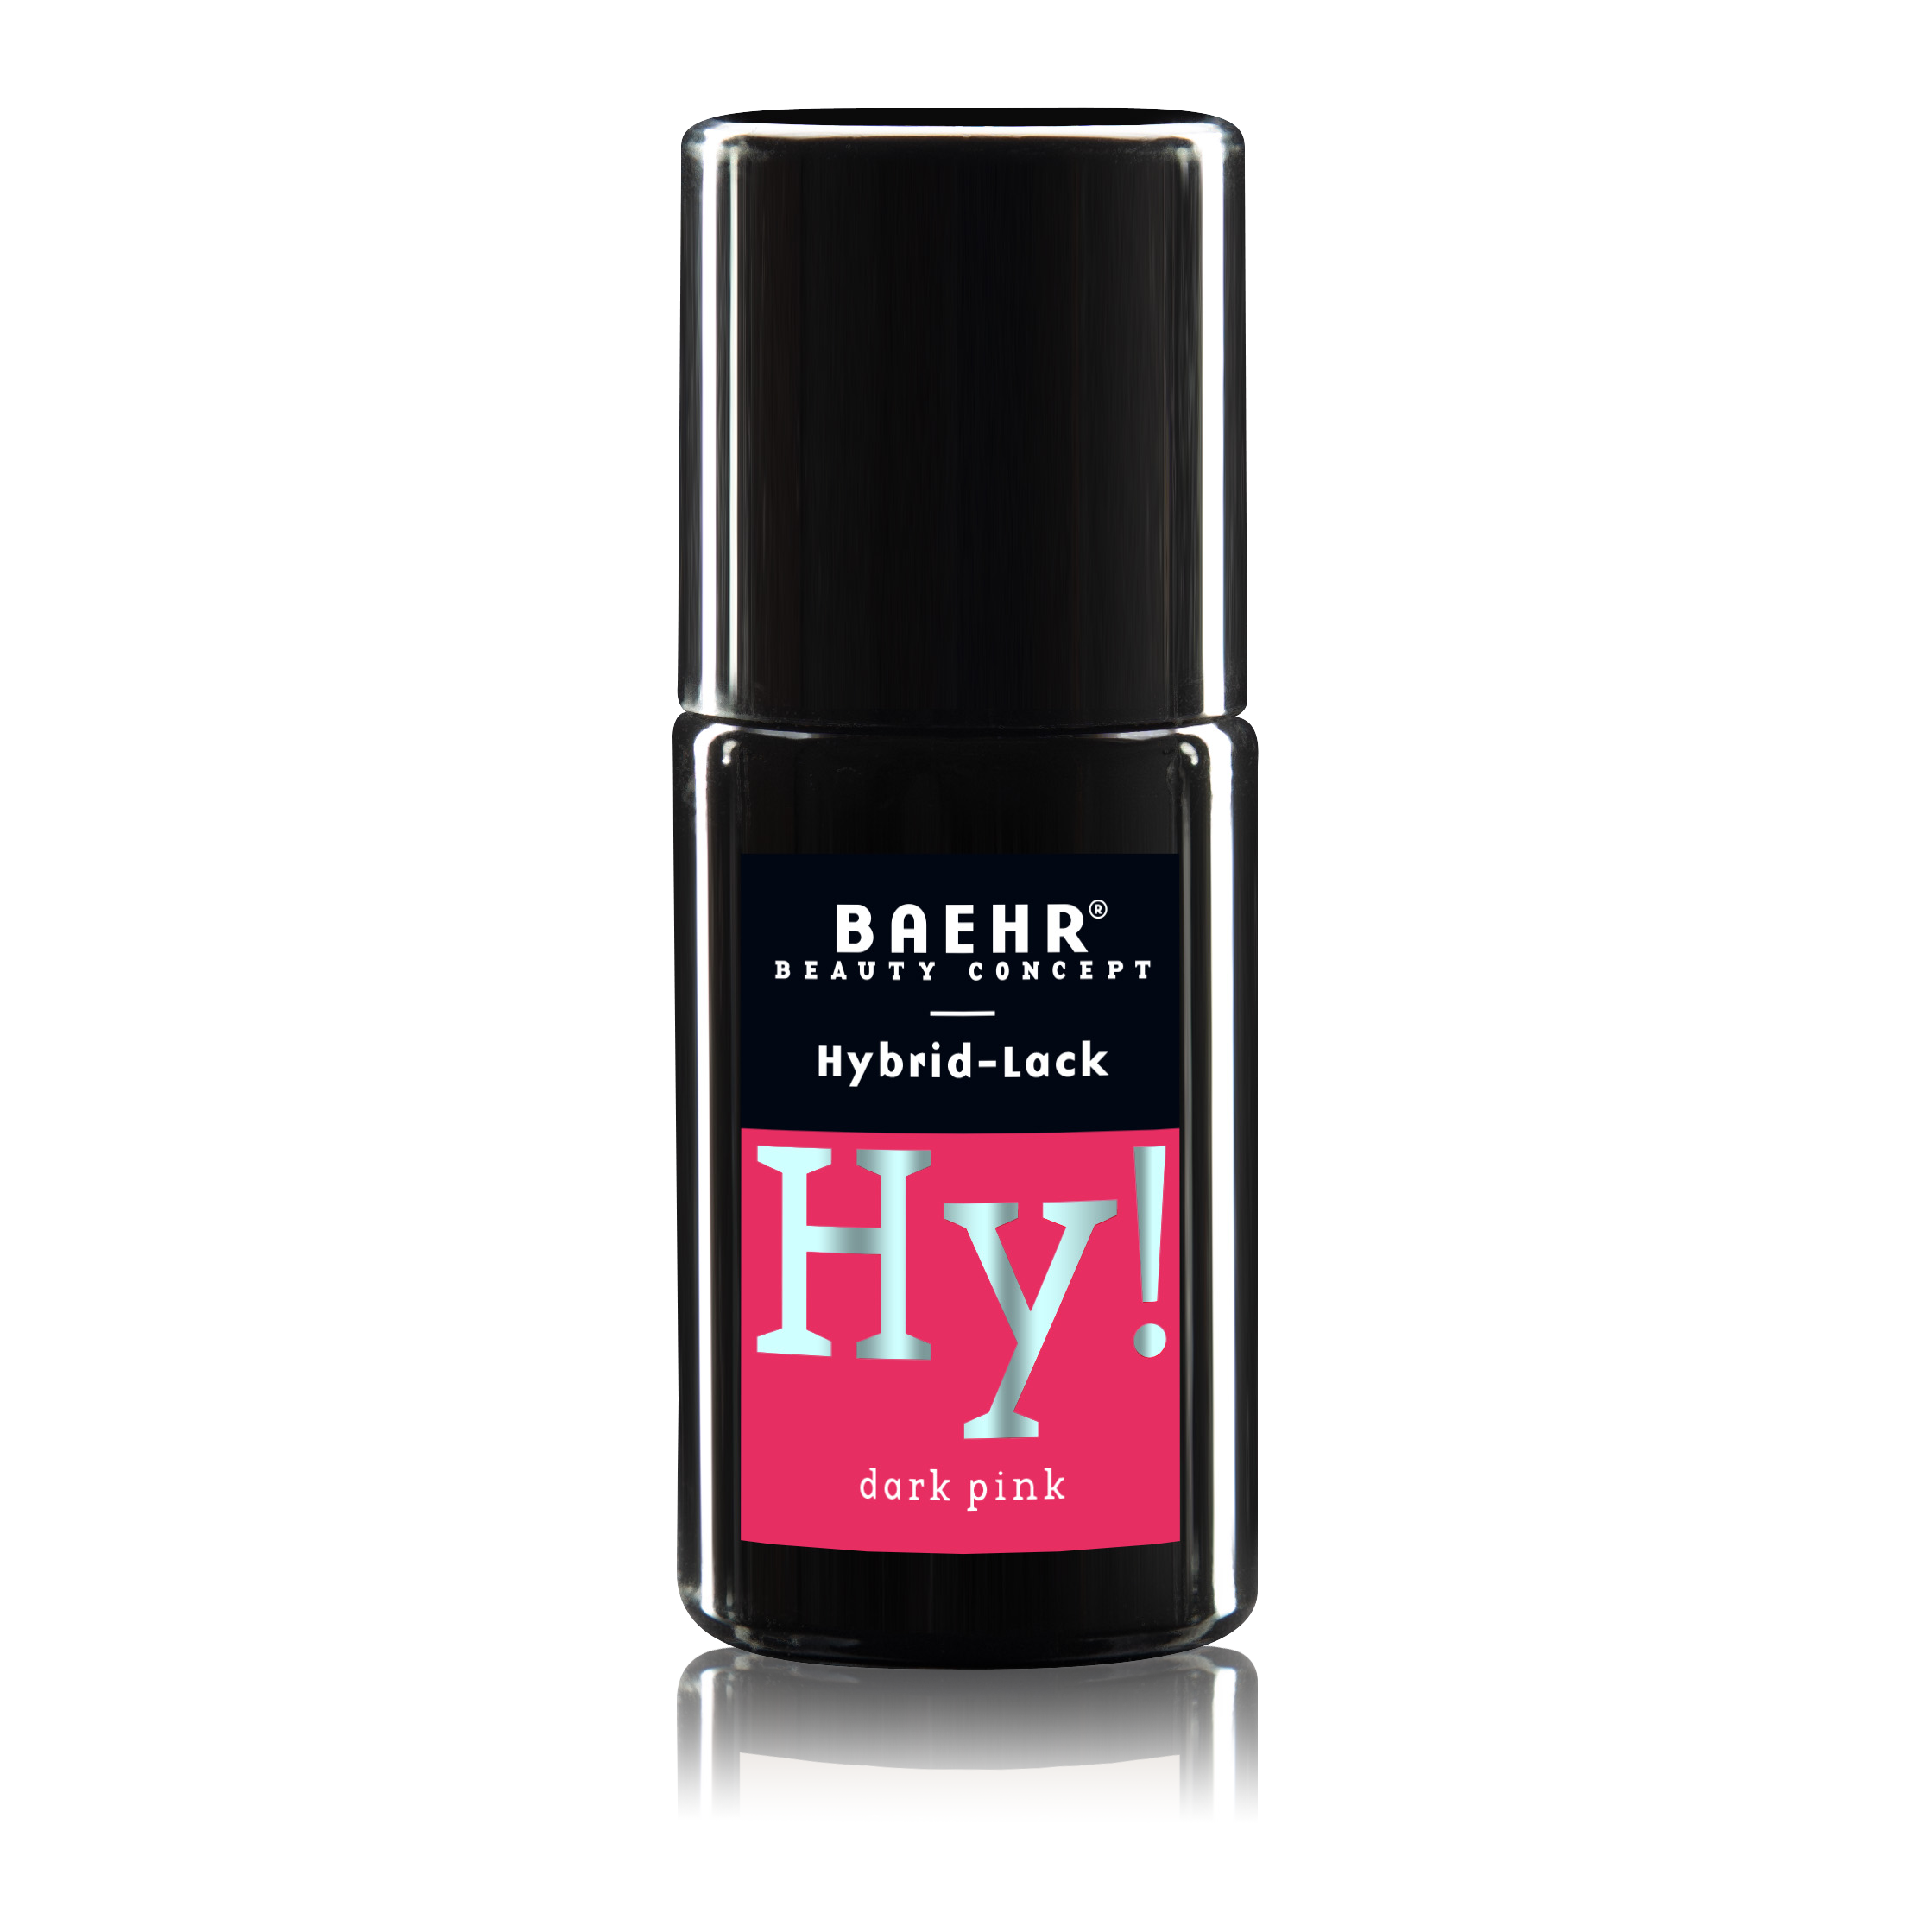 BAEHR BEAUTY CONCEPT - NAILS Hy! Hybrid-Lack, dark pink 8 ml